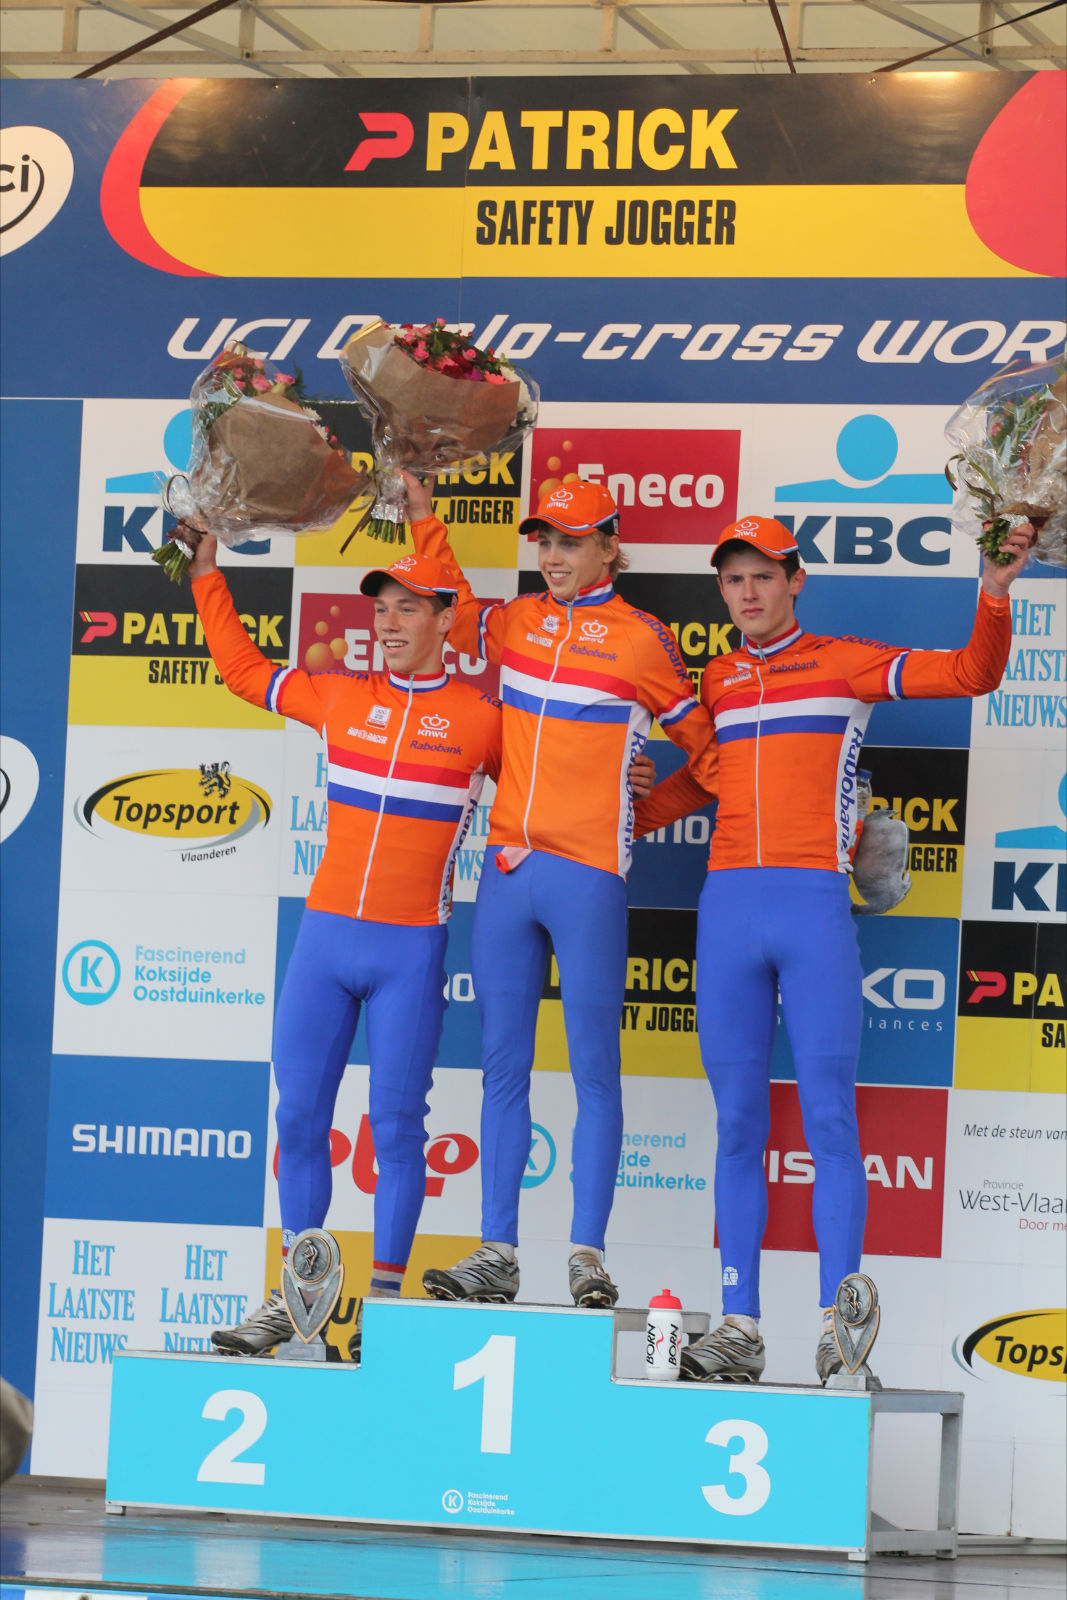 The U23 men's podium at Koksijde. Thomas van Bracht